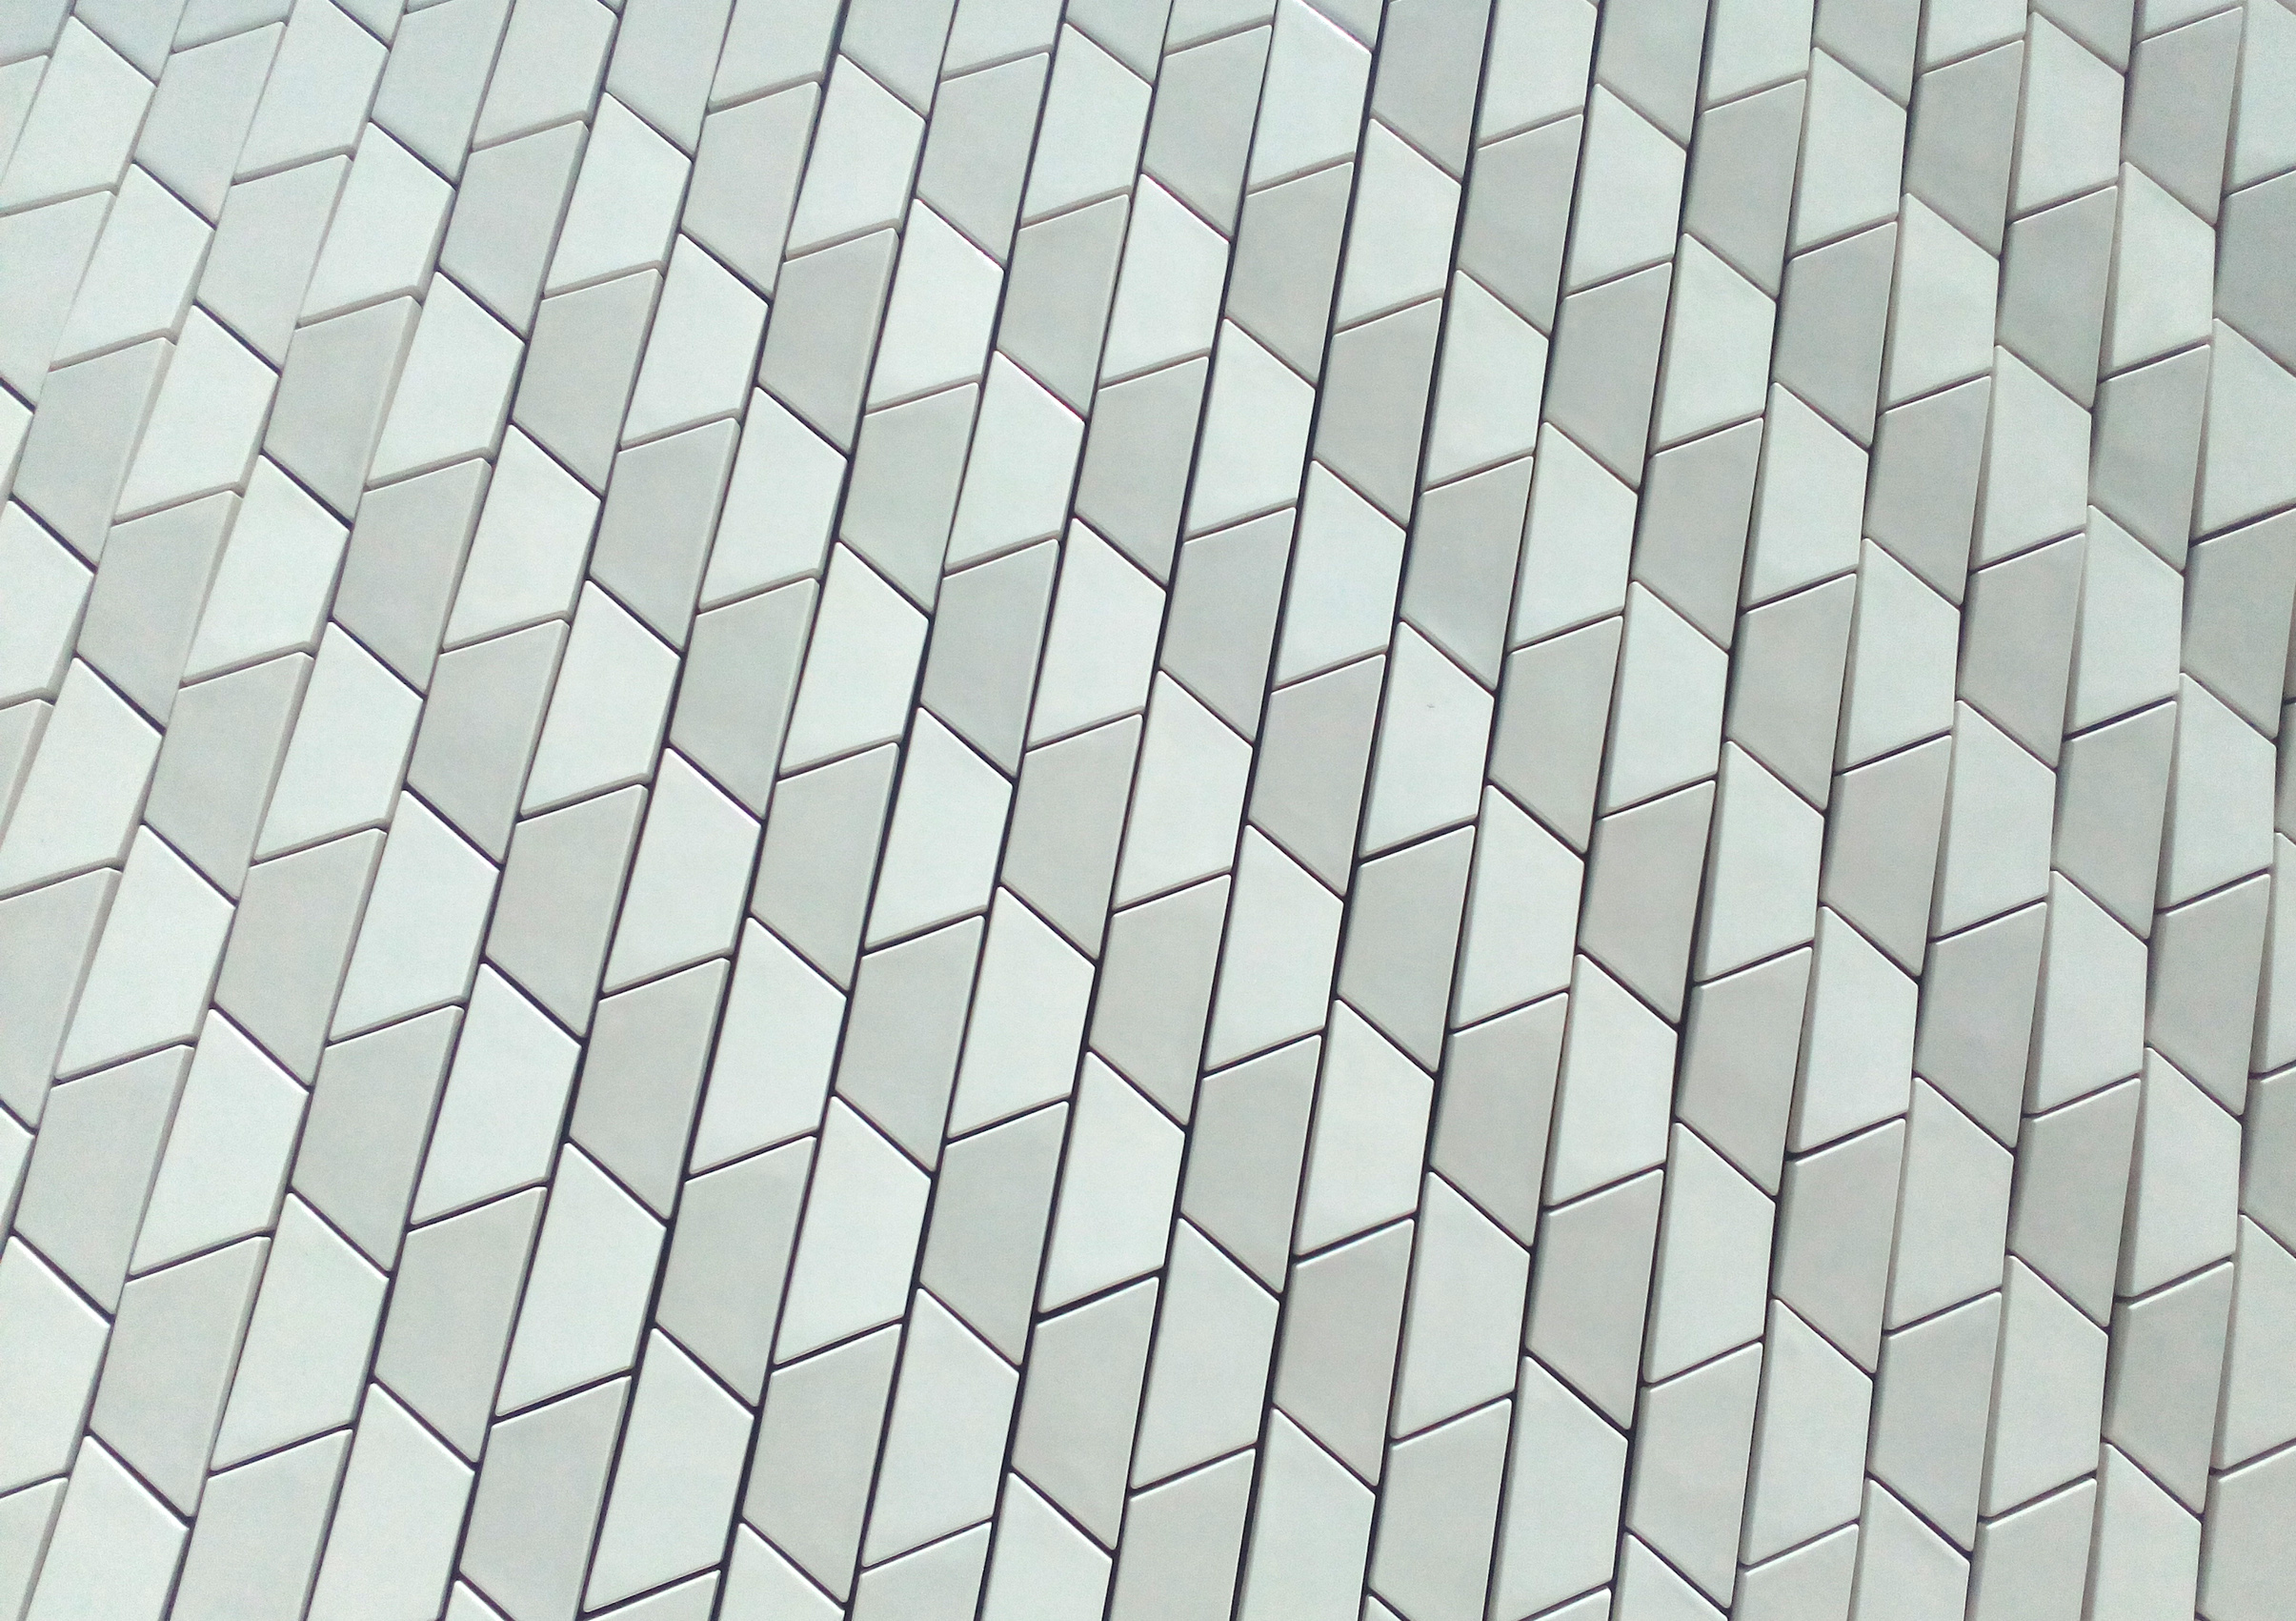 Architectural ceramic tiles - modern materials - pattern - maat photo